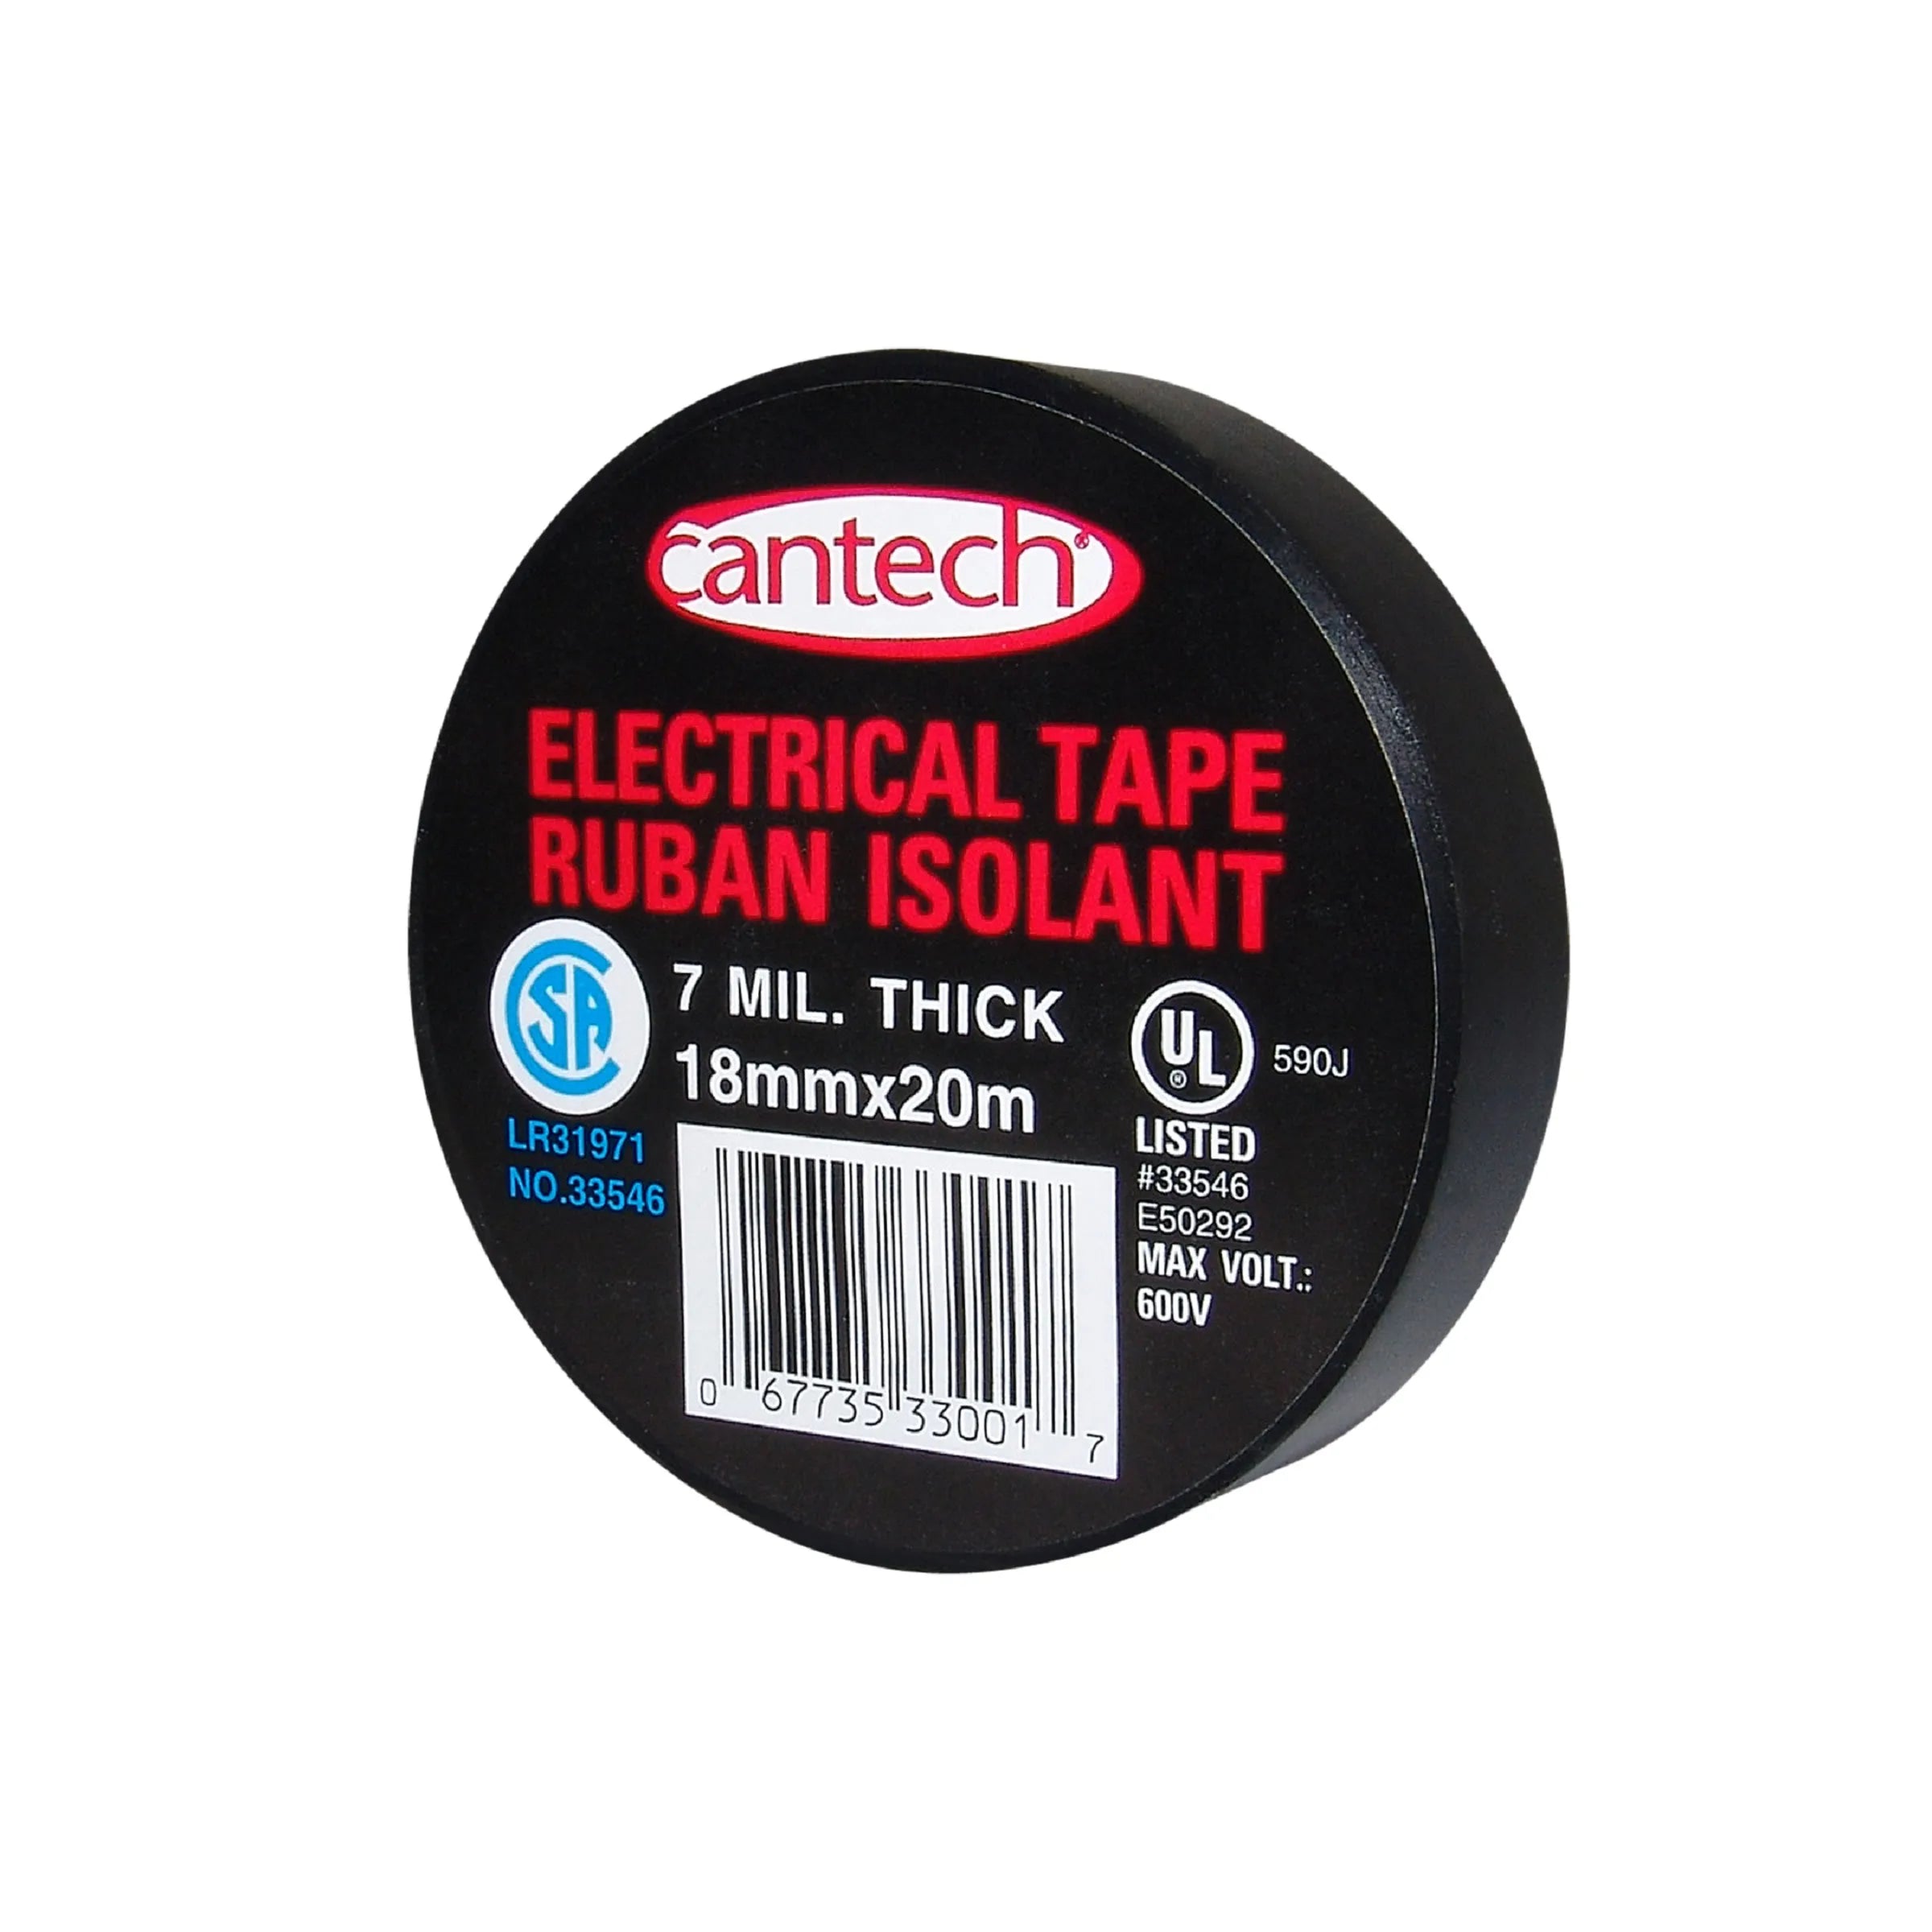 18mm x20m Electrical Tape, Black